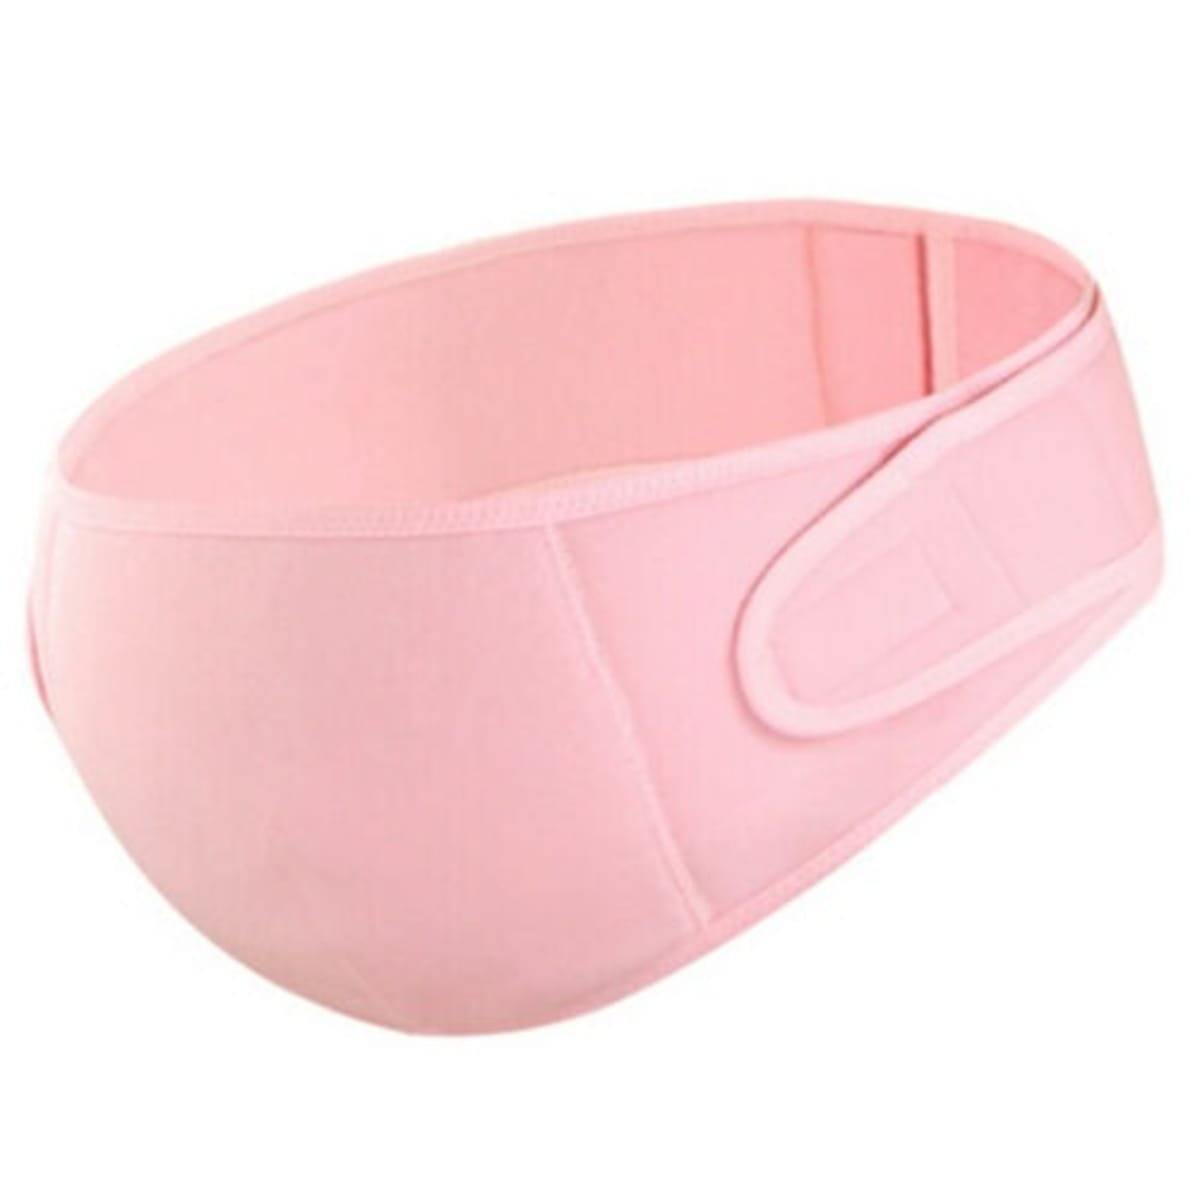 Maternity Abdomen/Back Support Belt - Pink